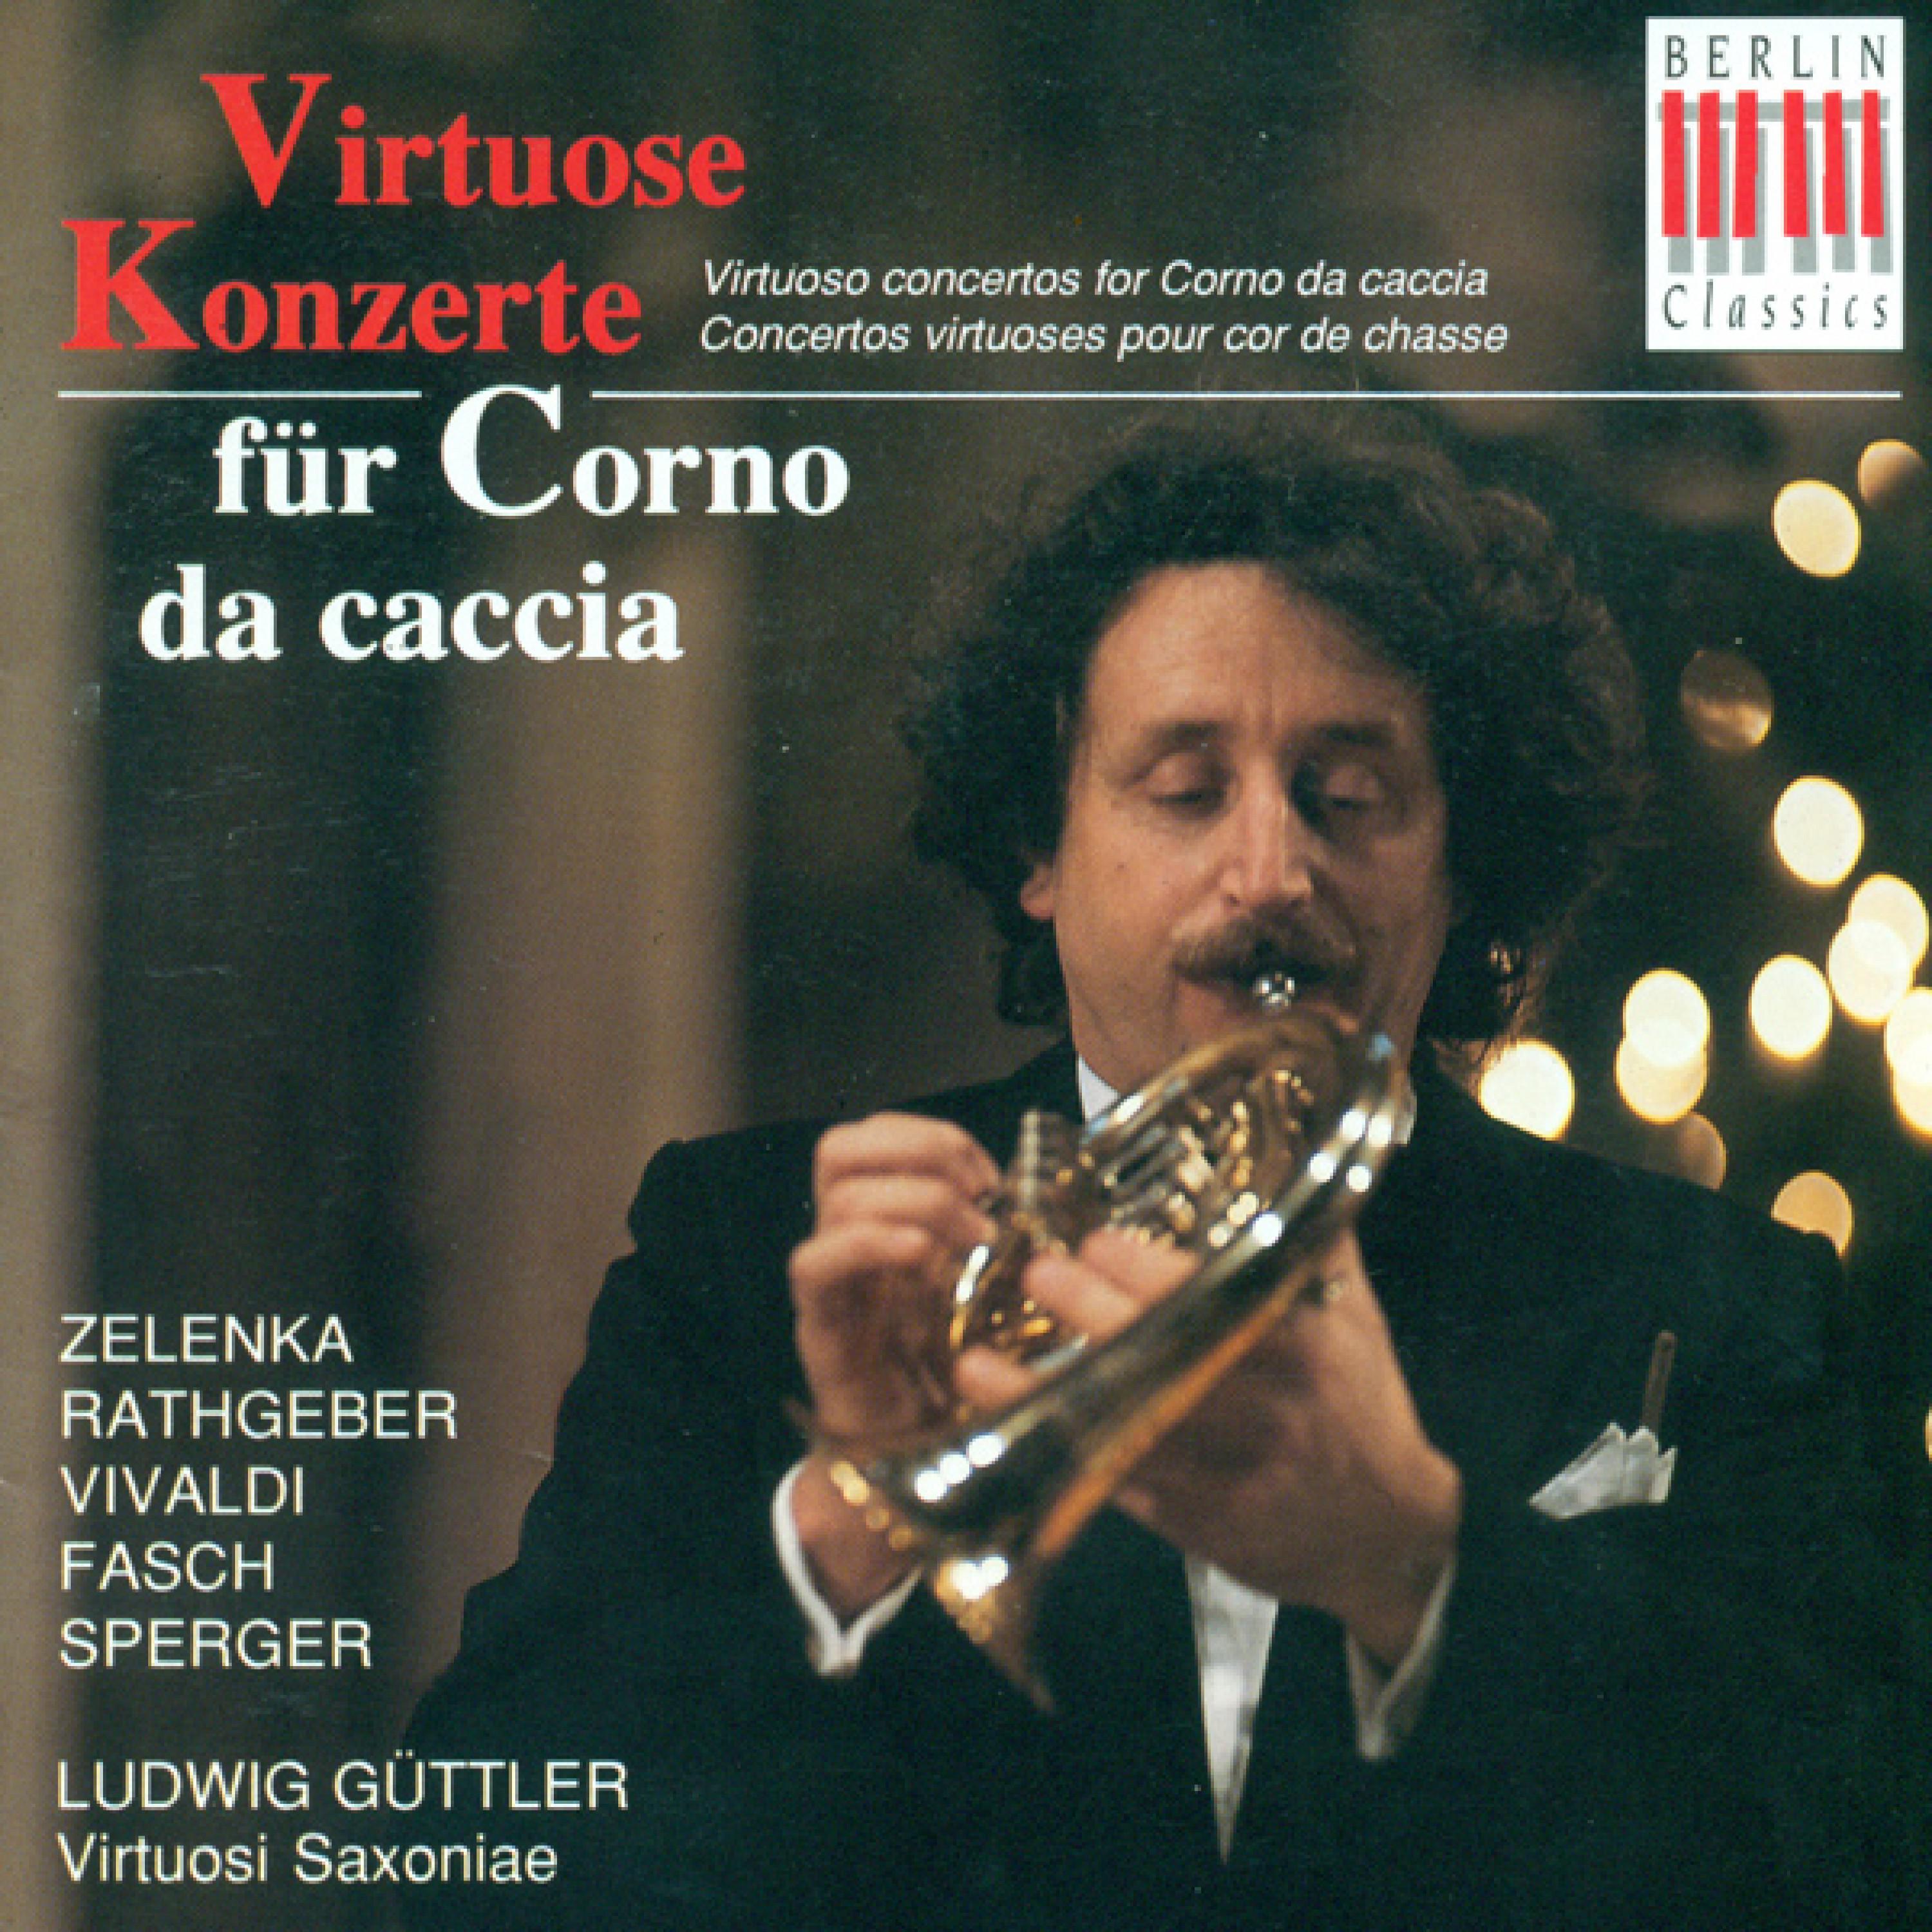 Concerto for Corno da caccia in C Major, Op. 6, No. 19: II. Adagio arranged by Ludwig Gü ttler